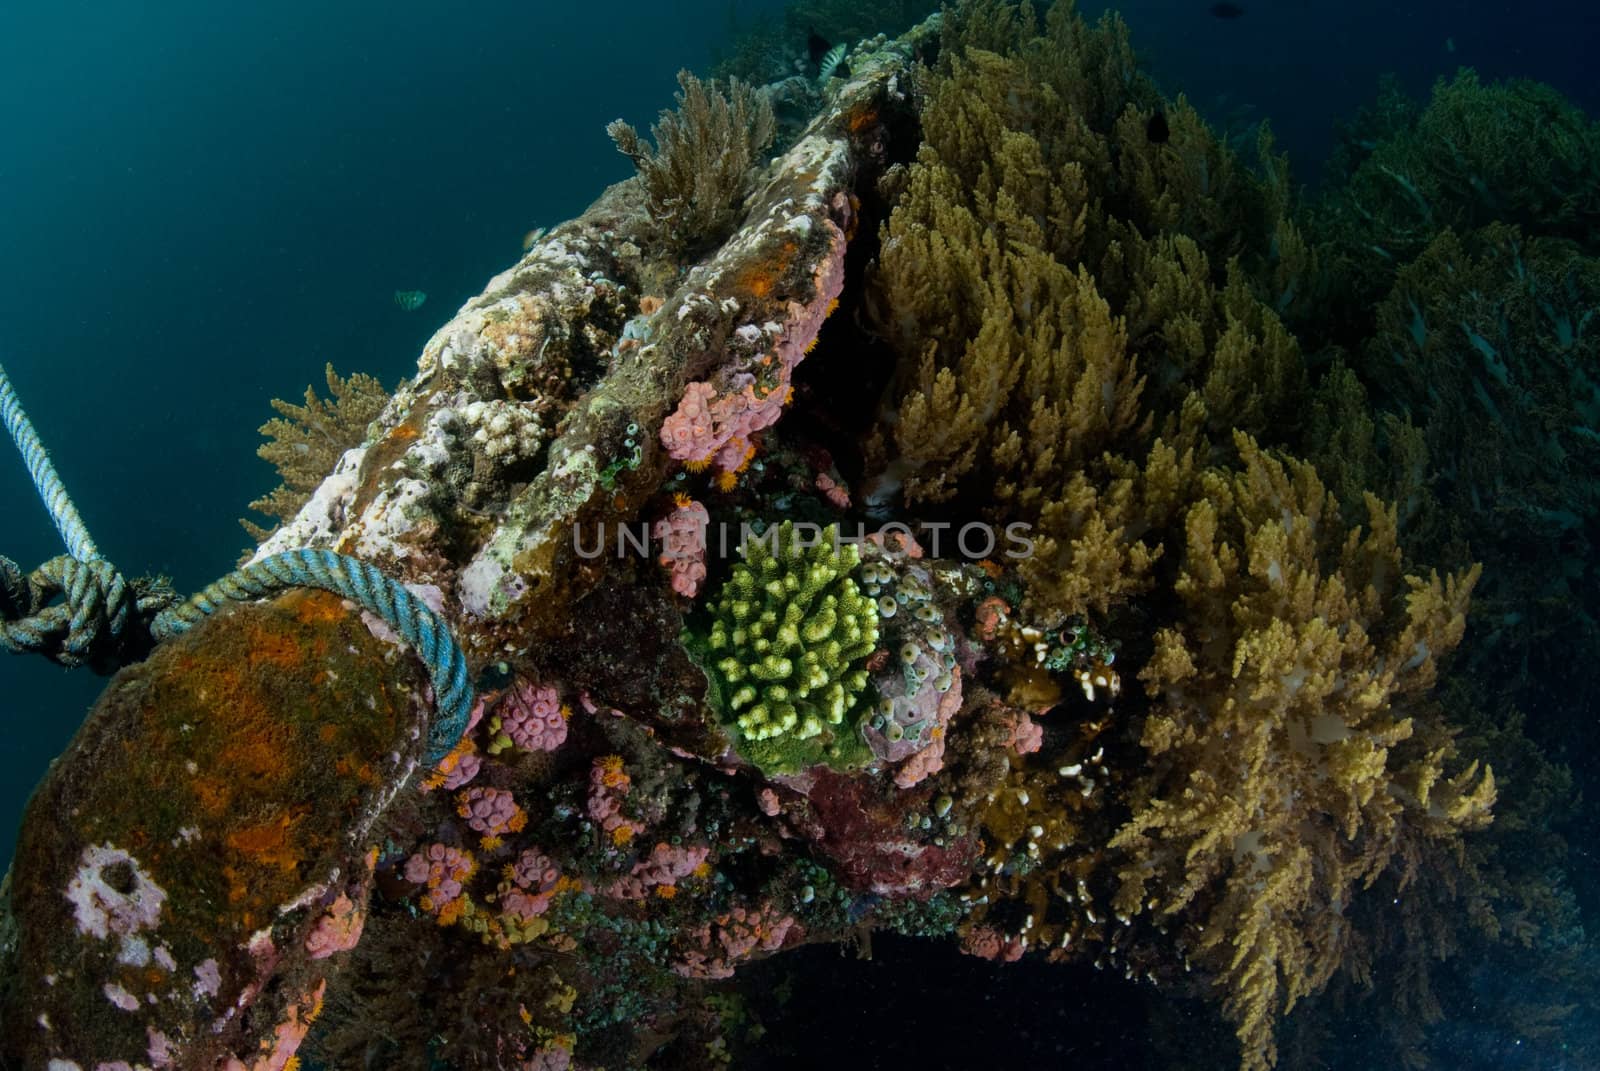 Underwater shipwreck by edan